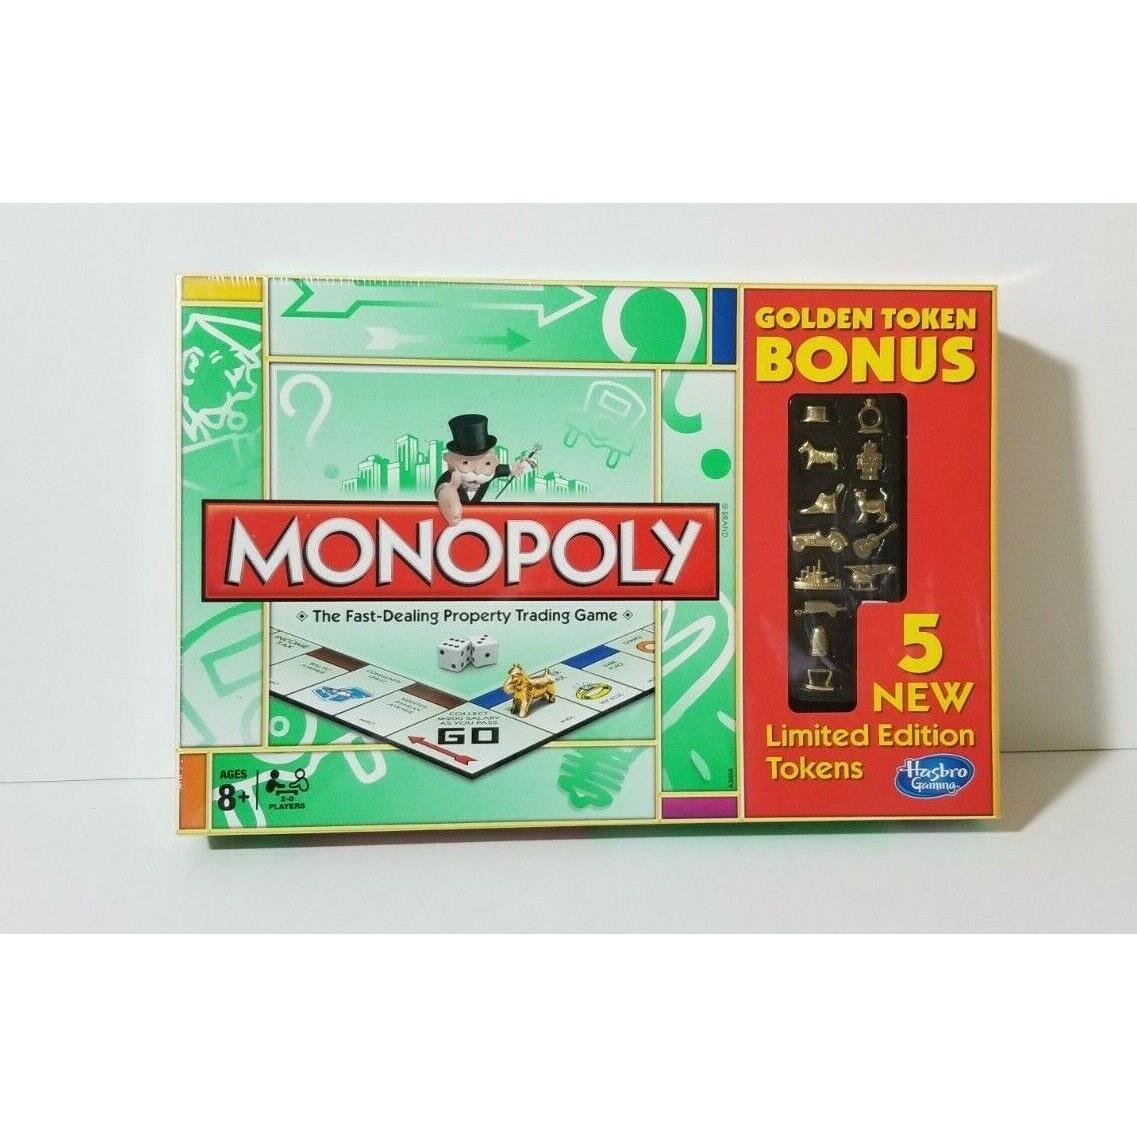 Monopoly Golden Token Bonus Edition w/ 5 Limited Edition Tokens